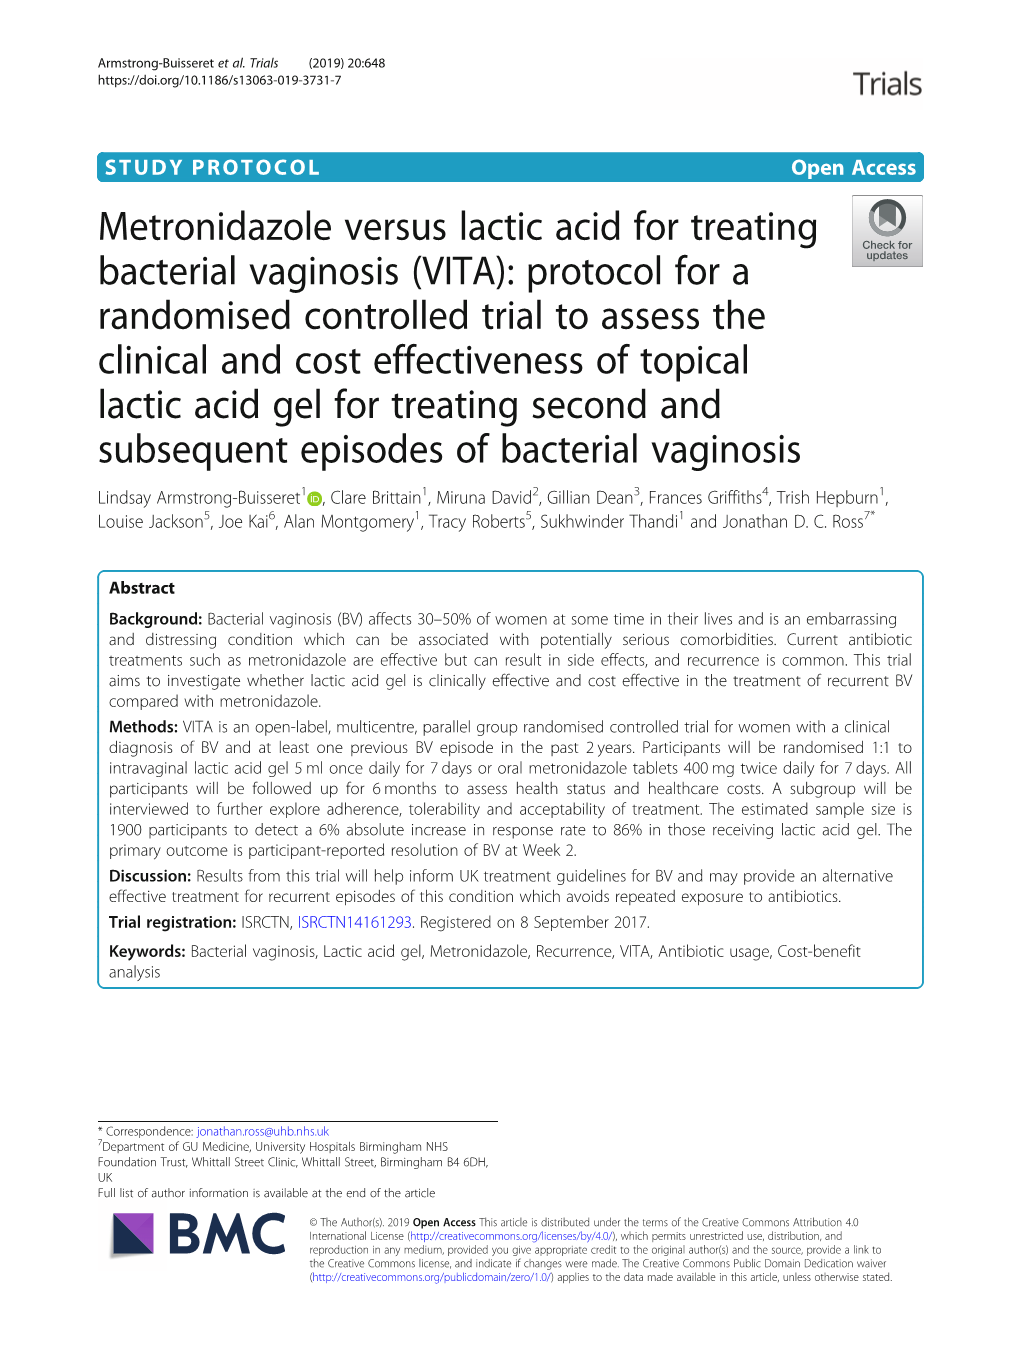 Metronidazole Versus Lactic Acid for Treating Bacterial Vaginosis (VITA)